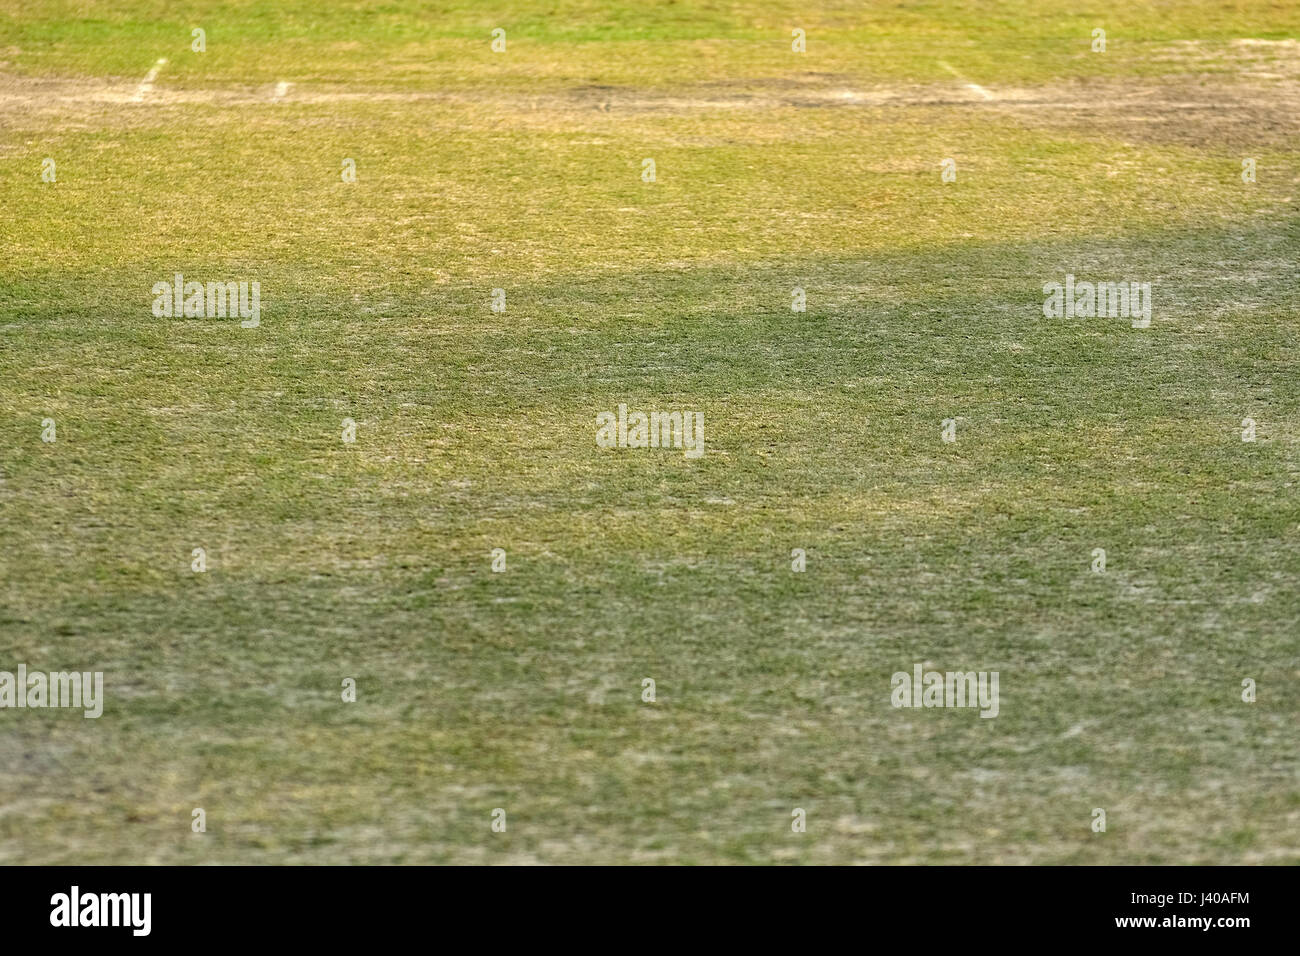 Empty cricket pitch Stock Photo